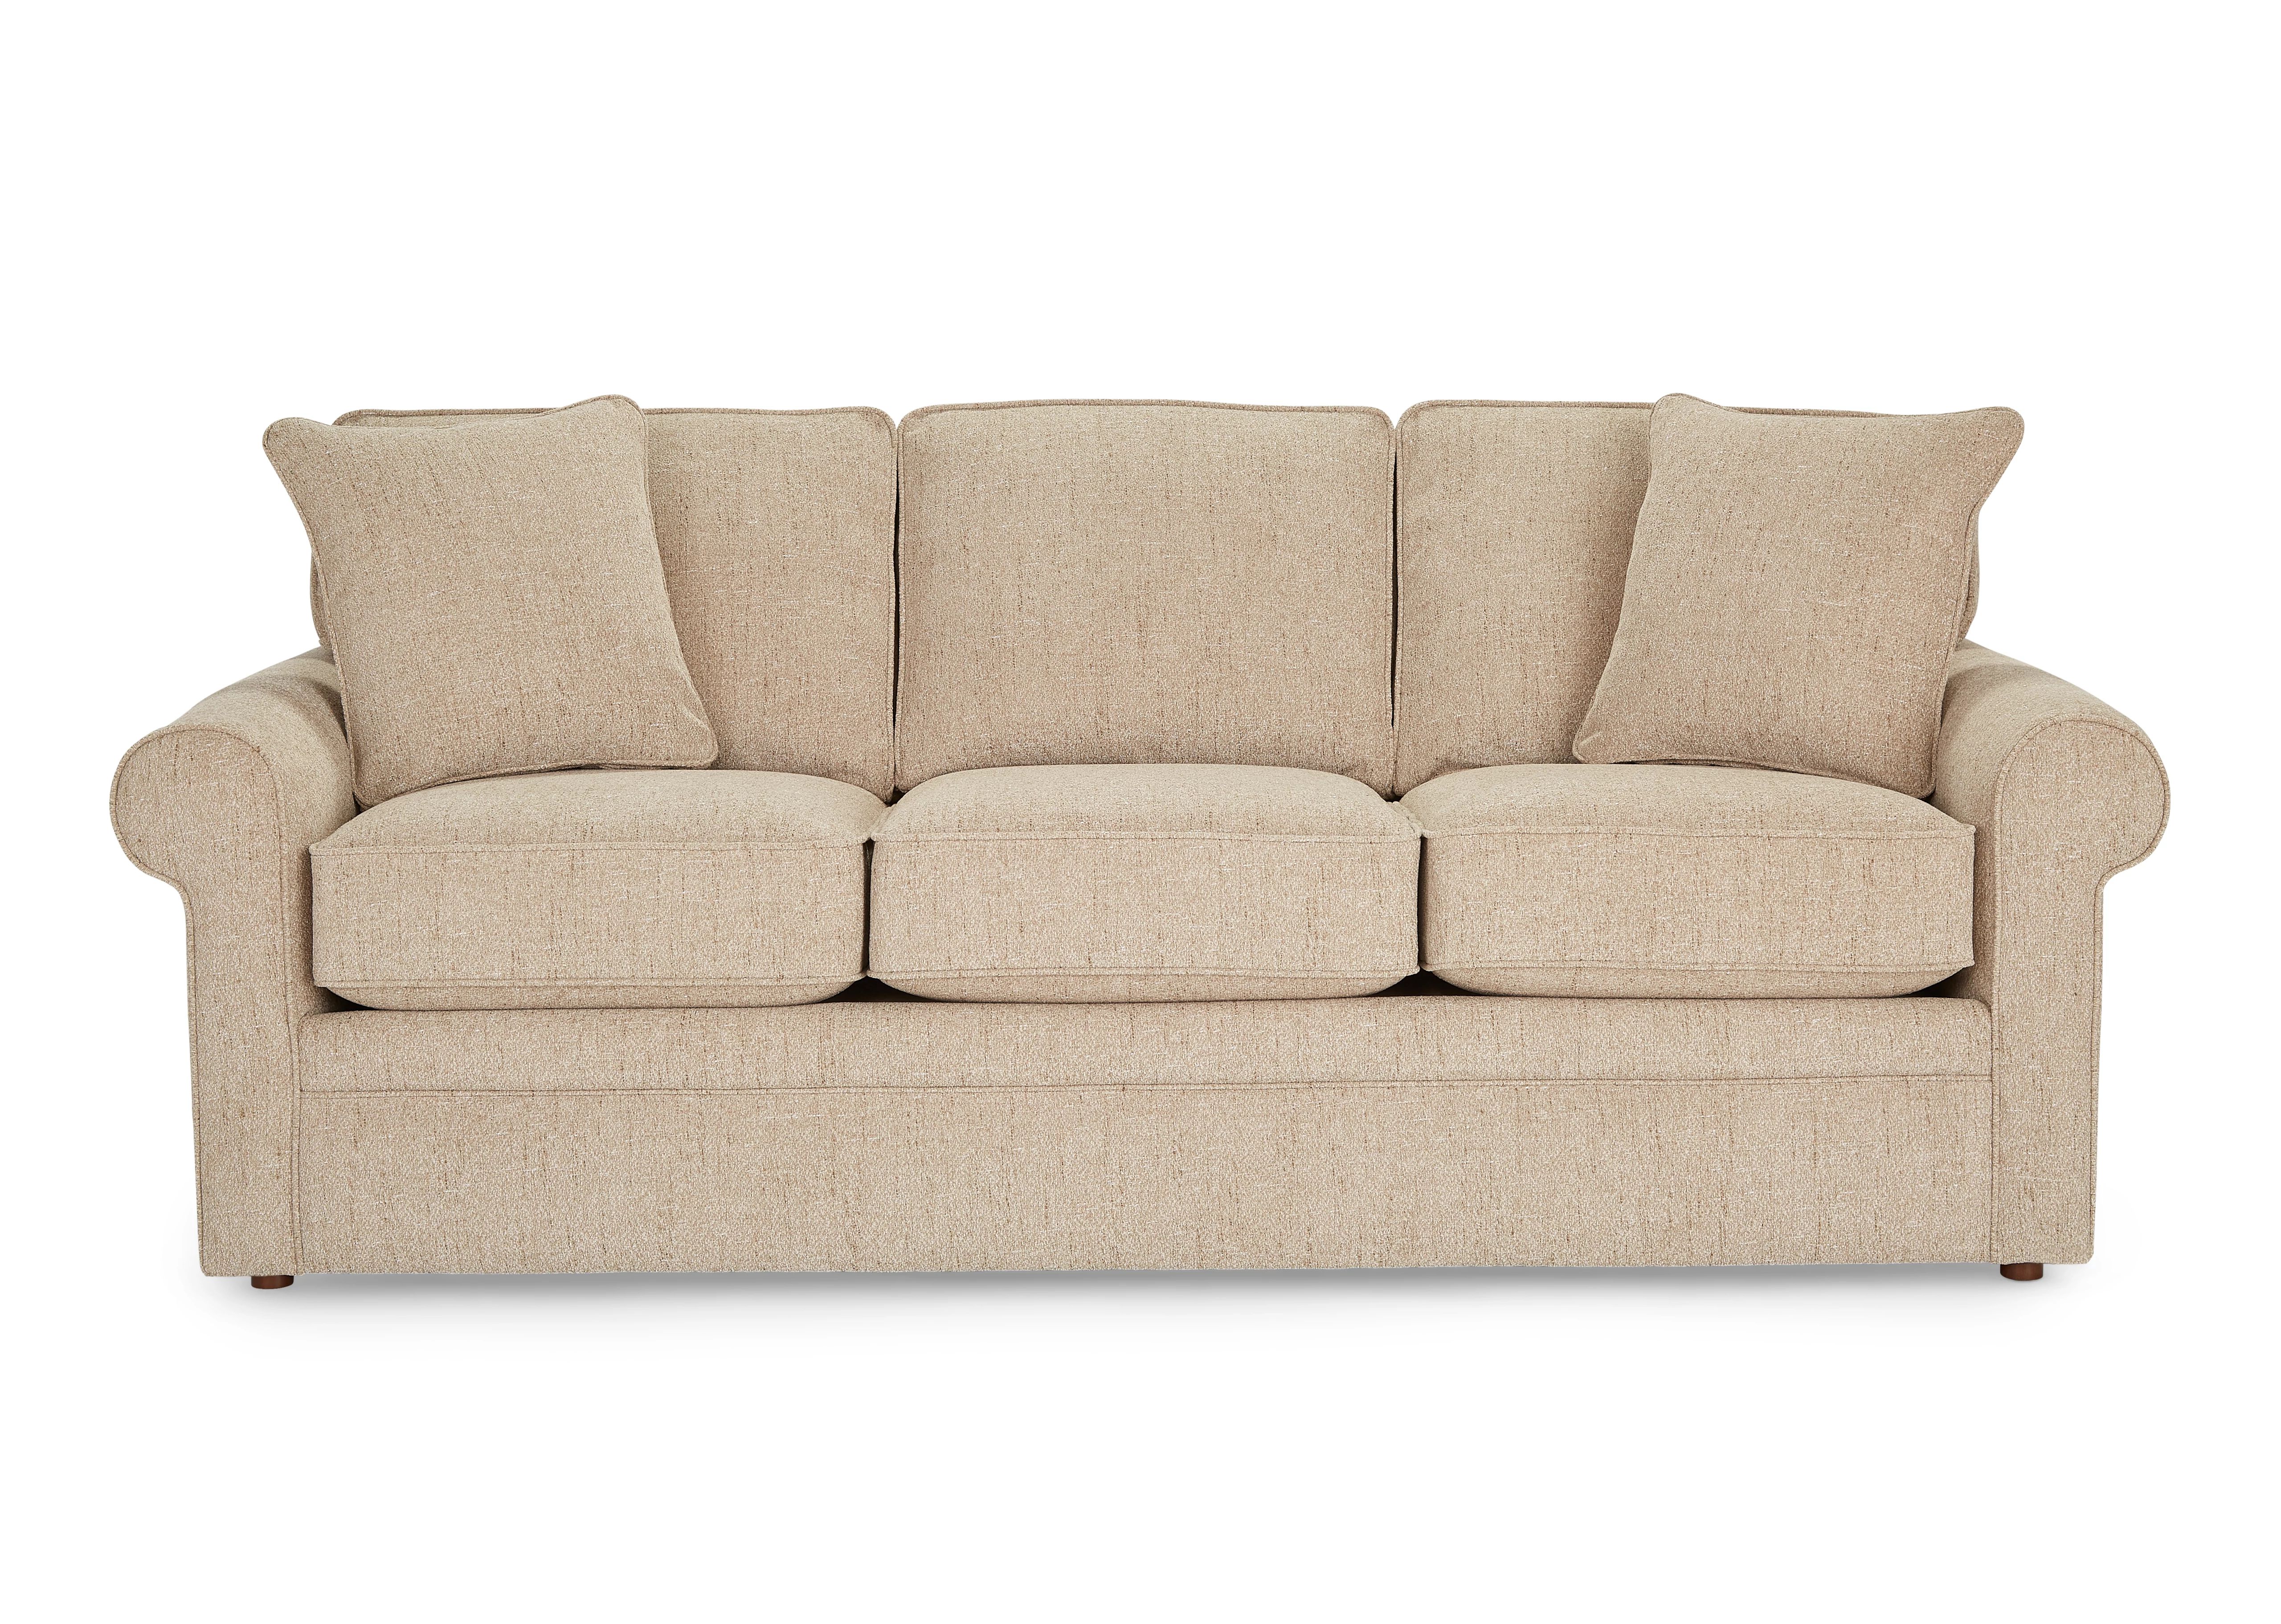 Image - 1 - Collins Fabric Sofa